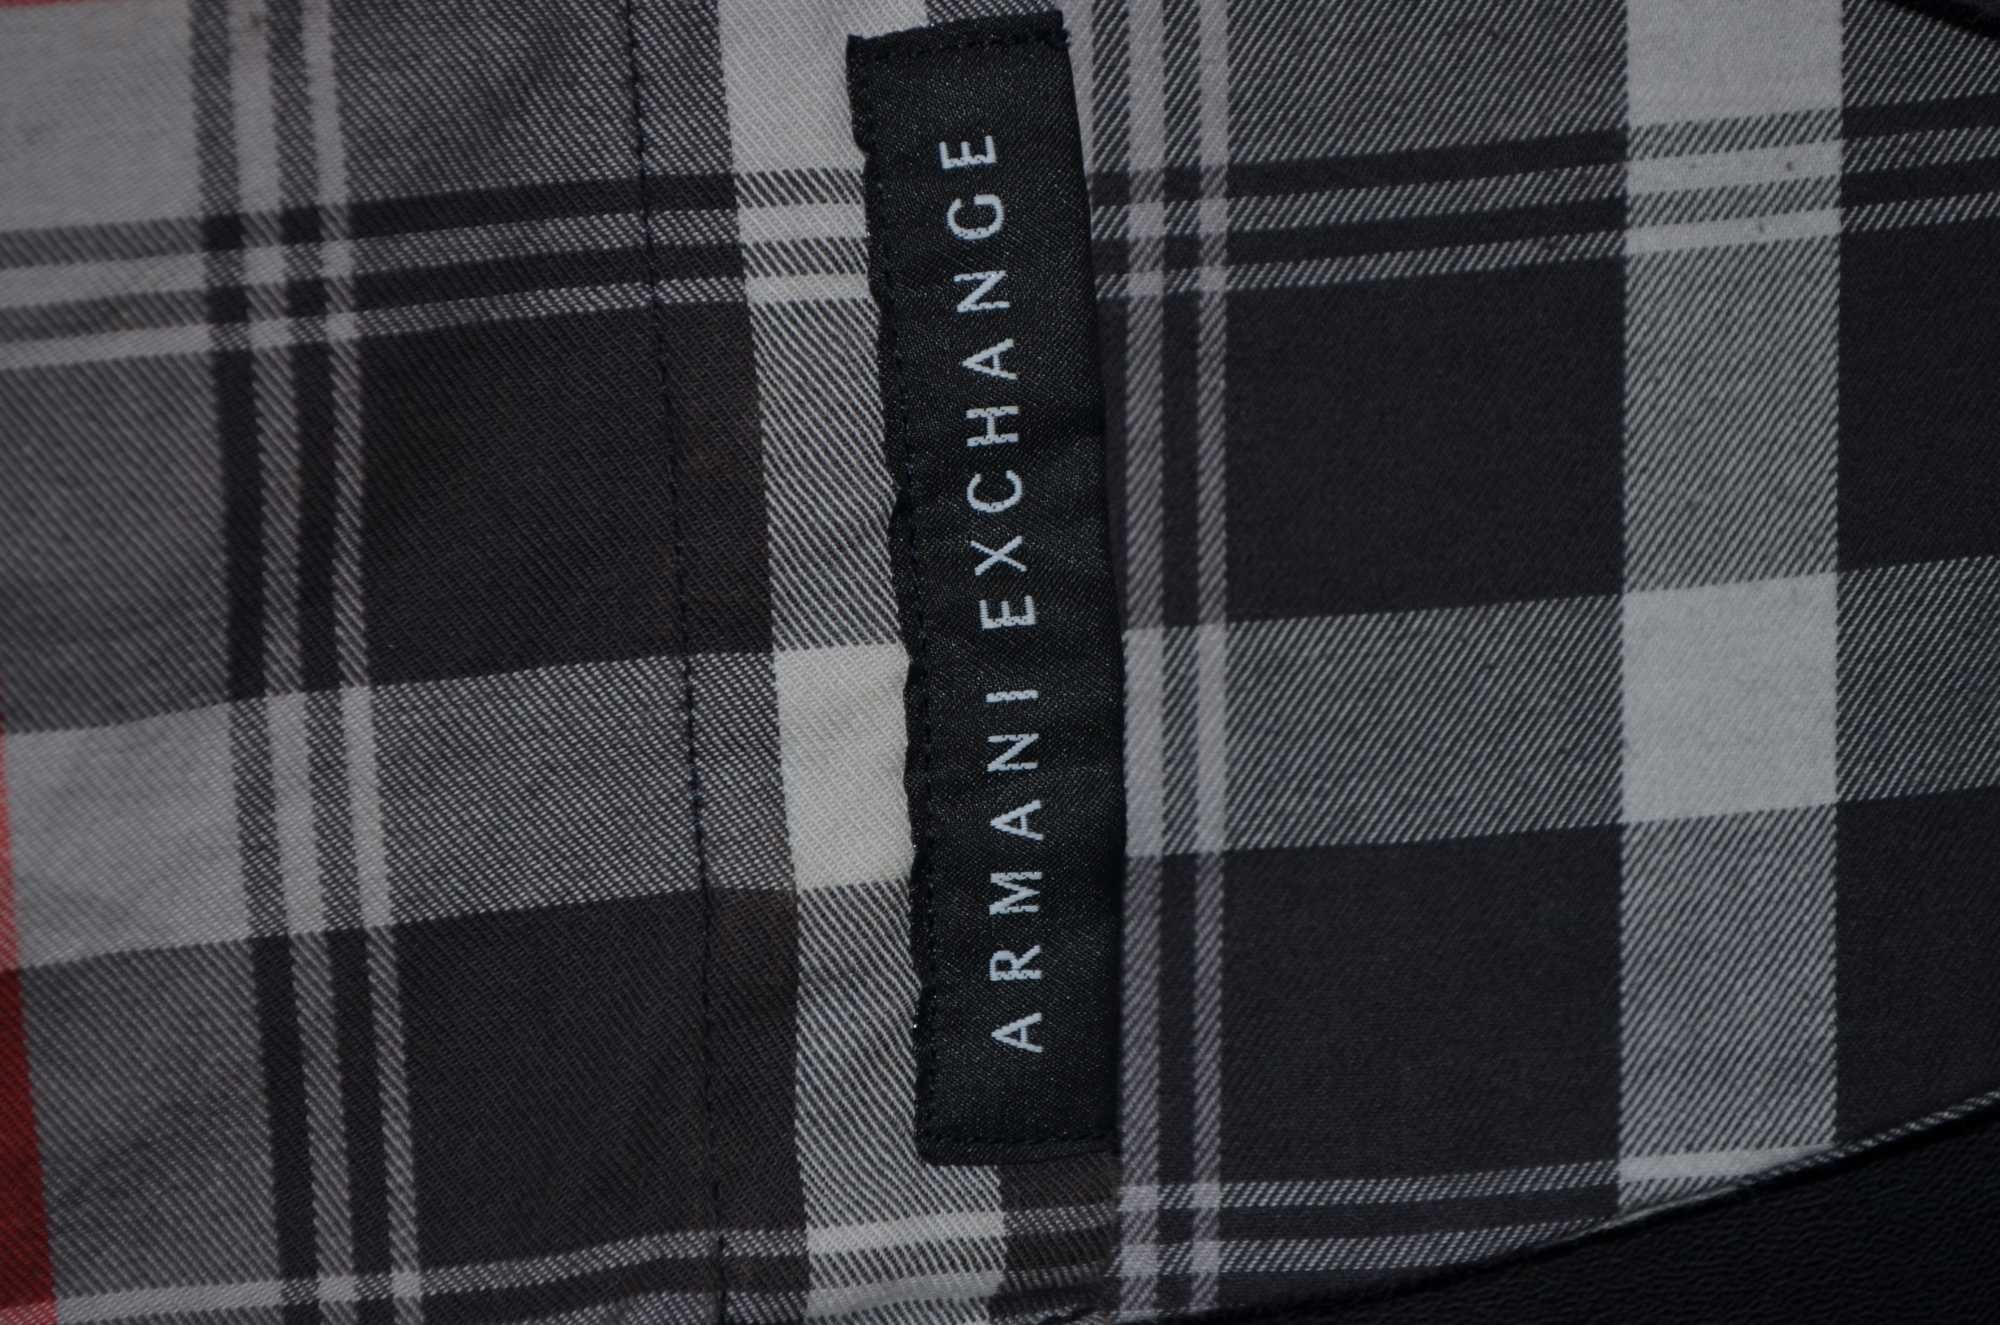 Рубашка Armani Exchange Mens Shirt Plaid Size XS, Сорочка